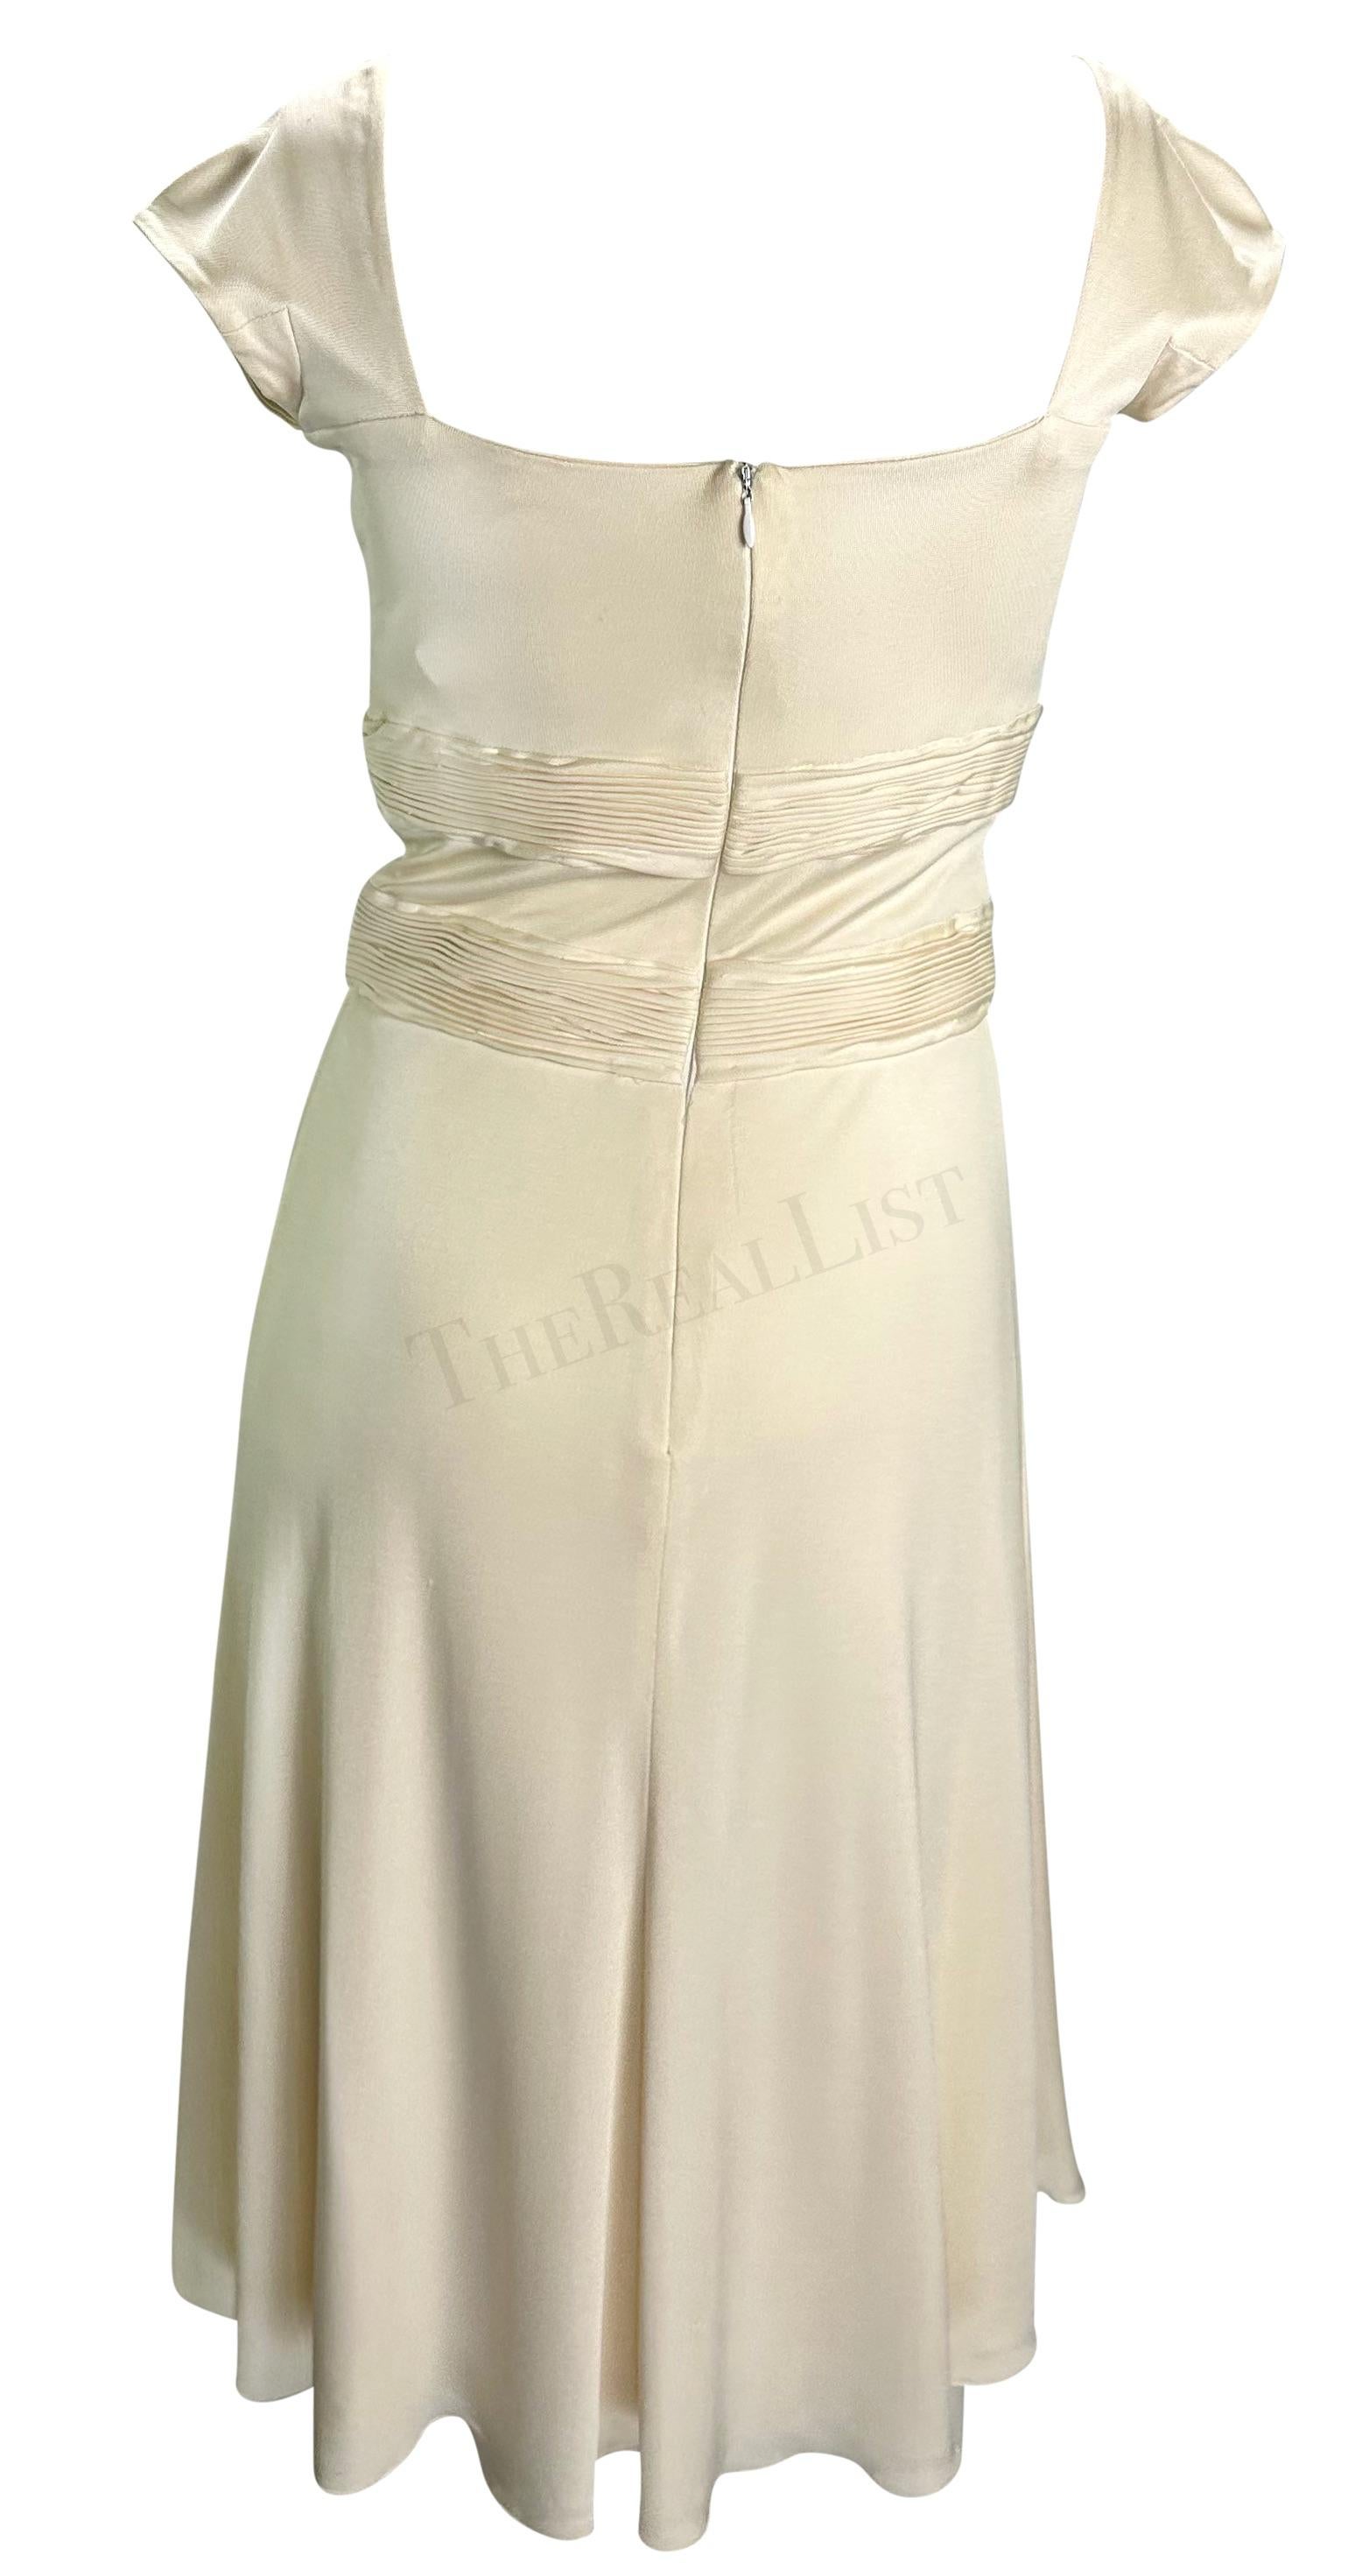 S/S 2004 Valentino Garavani Runway Ad Ruched Off-White Flare Dress For Sale 3